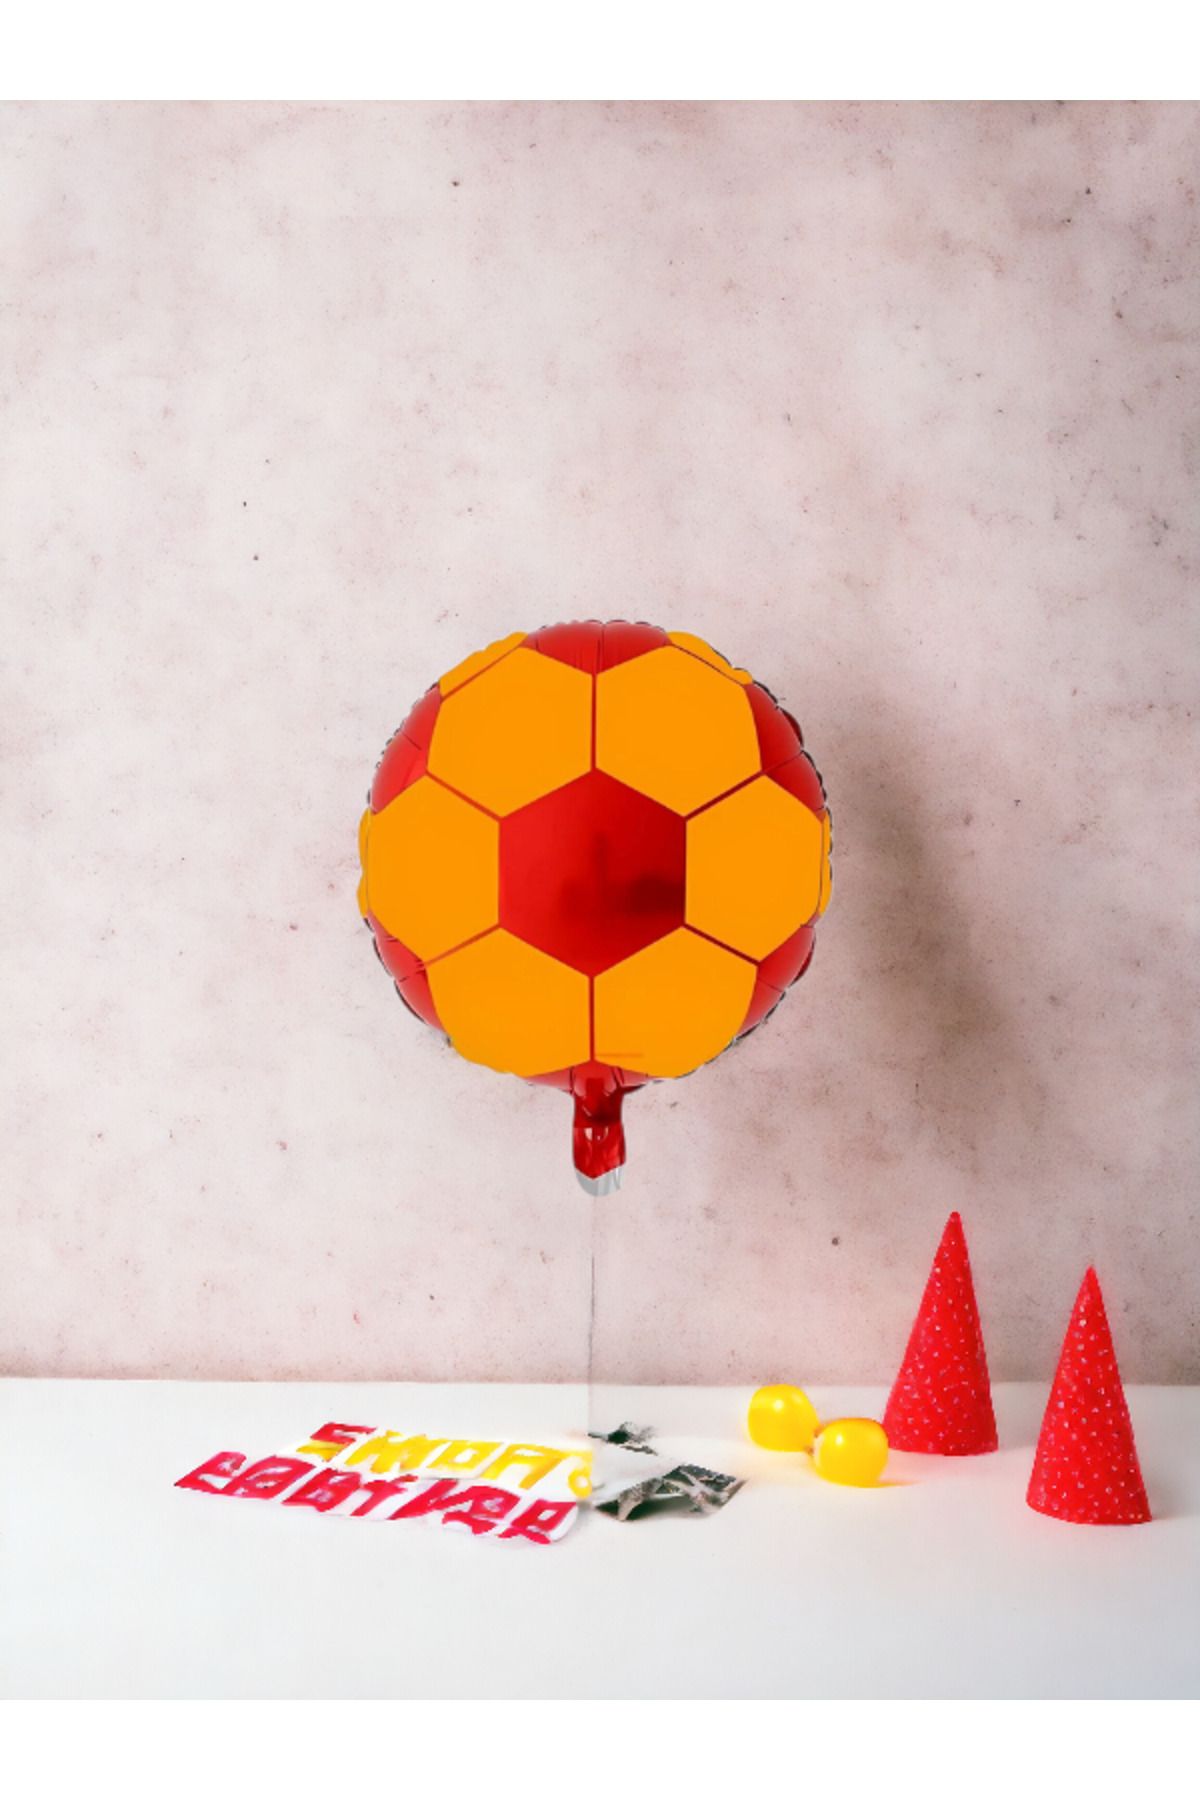 LASAGNA STORE Futbol Topu Baskılı Folyo Balon